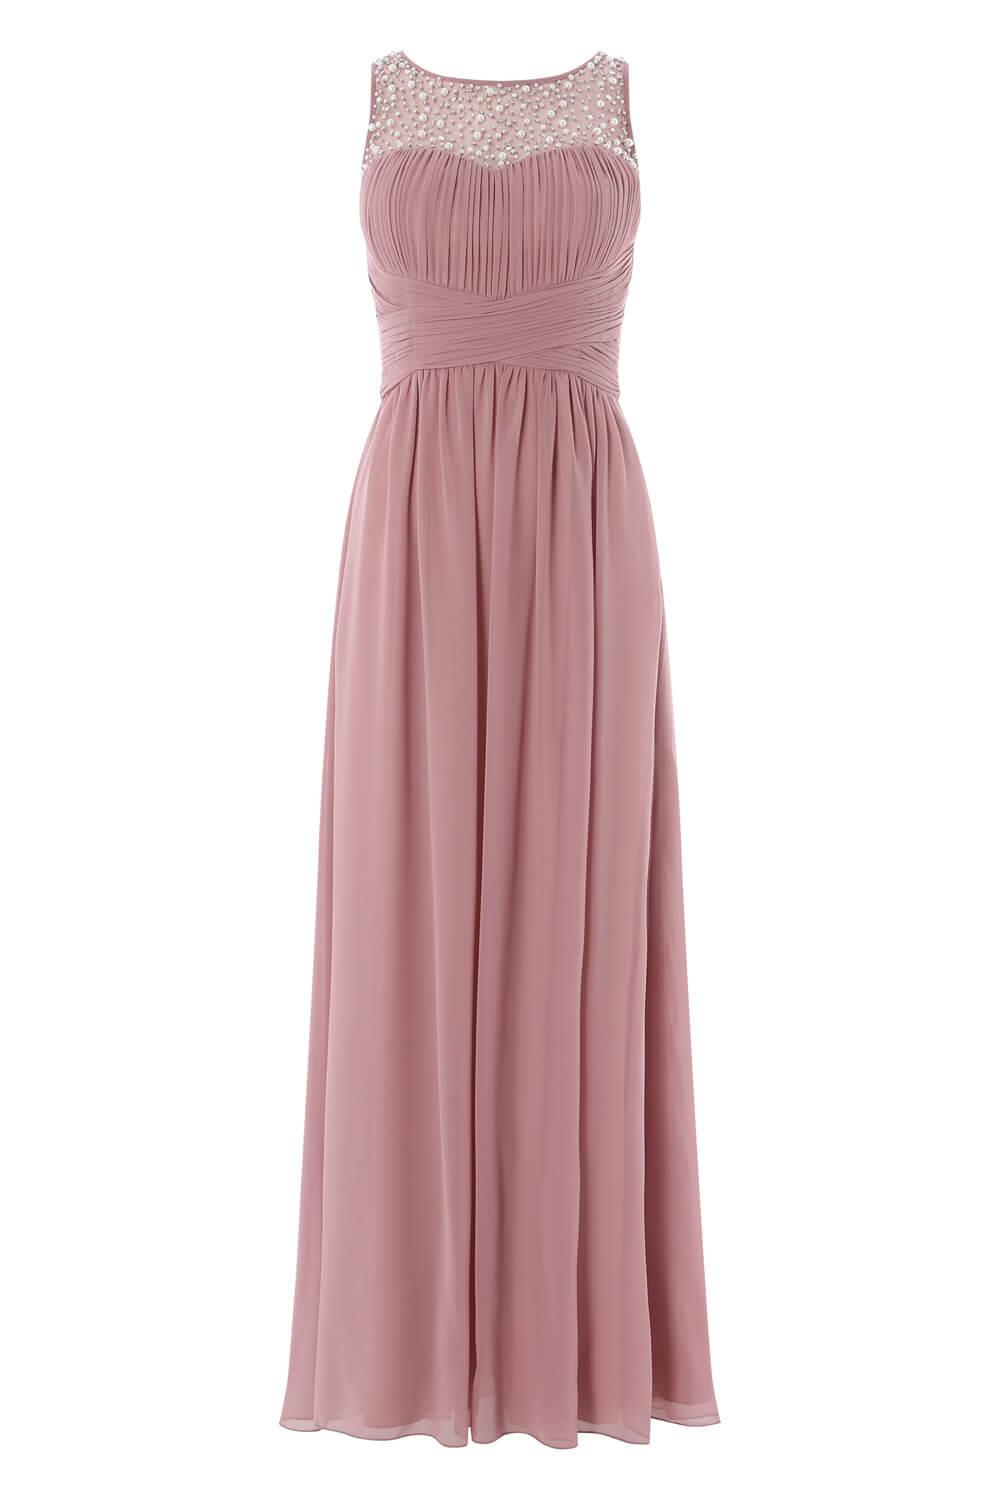 Bead Embellished Maxi Dress in ROSE - Roman Originals UK